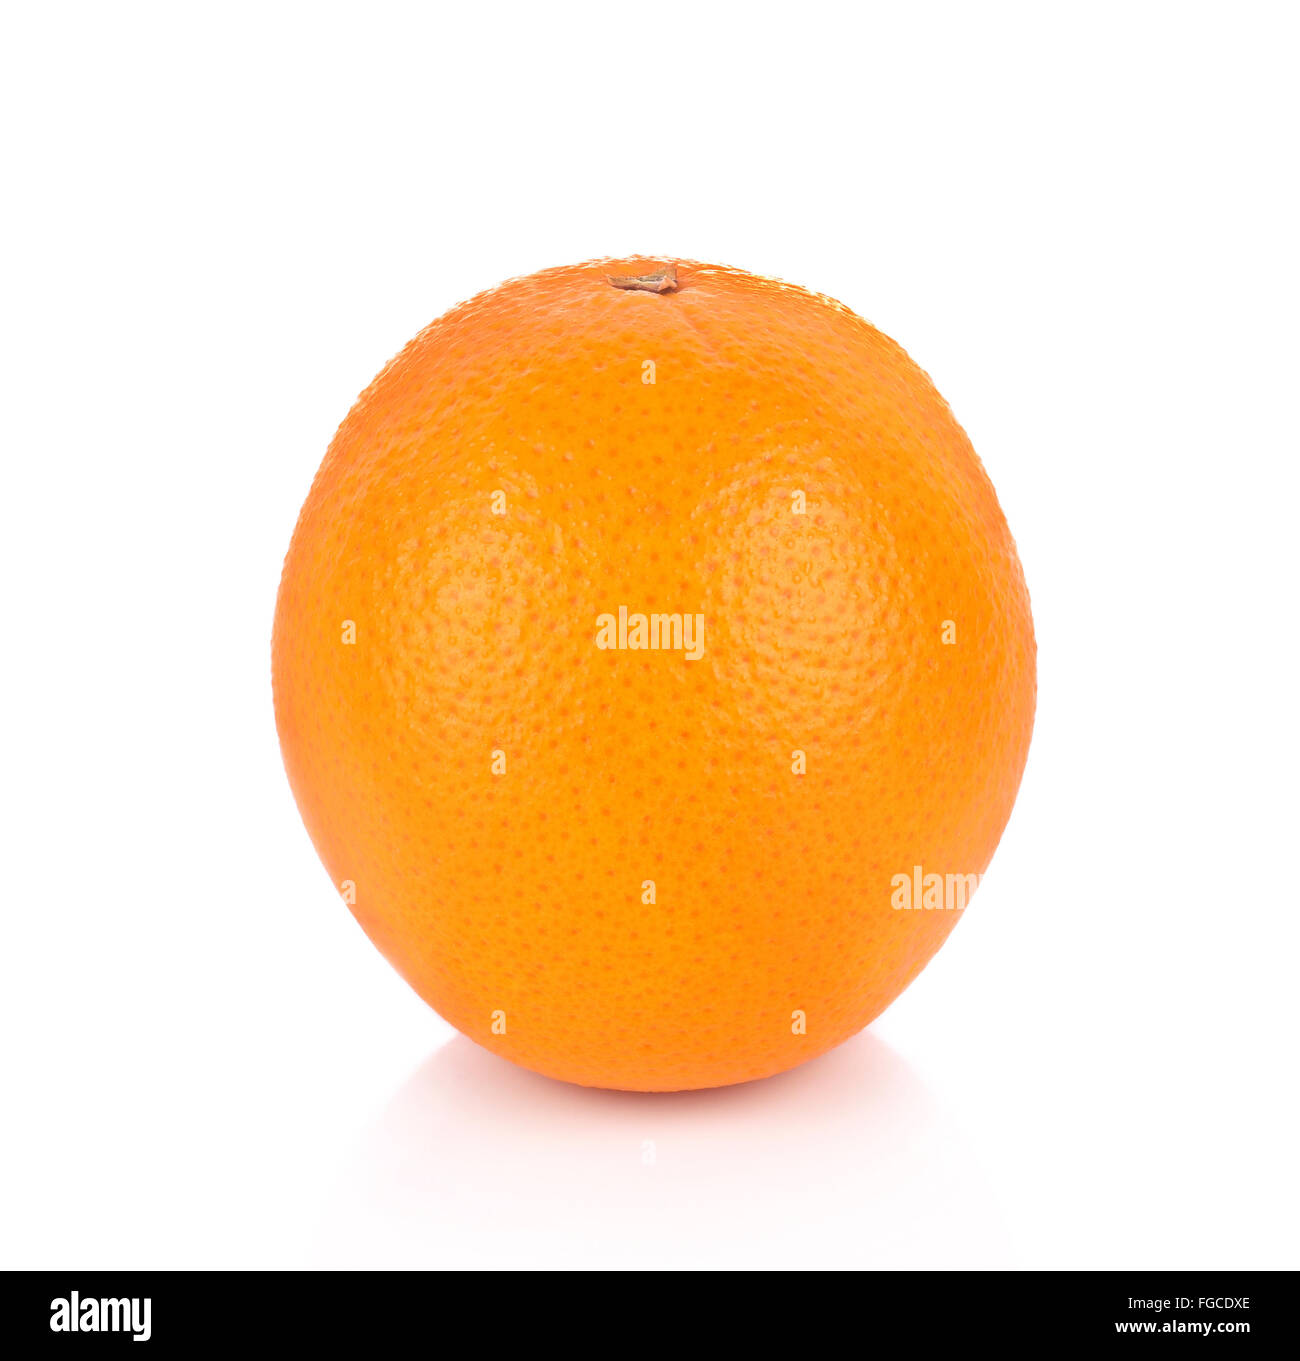 Orange Fruit Sliced Isolated On White Background Stock Photo, Picture and  Royalty Free Image. Image 35300340.